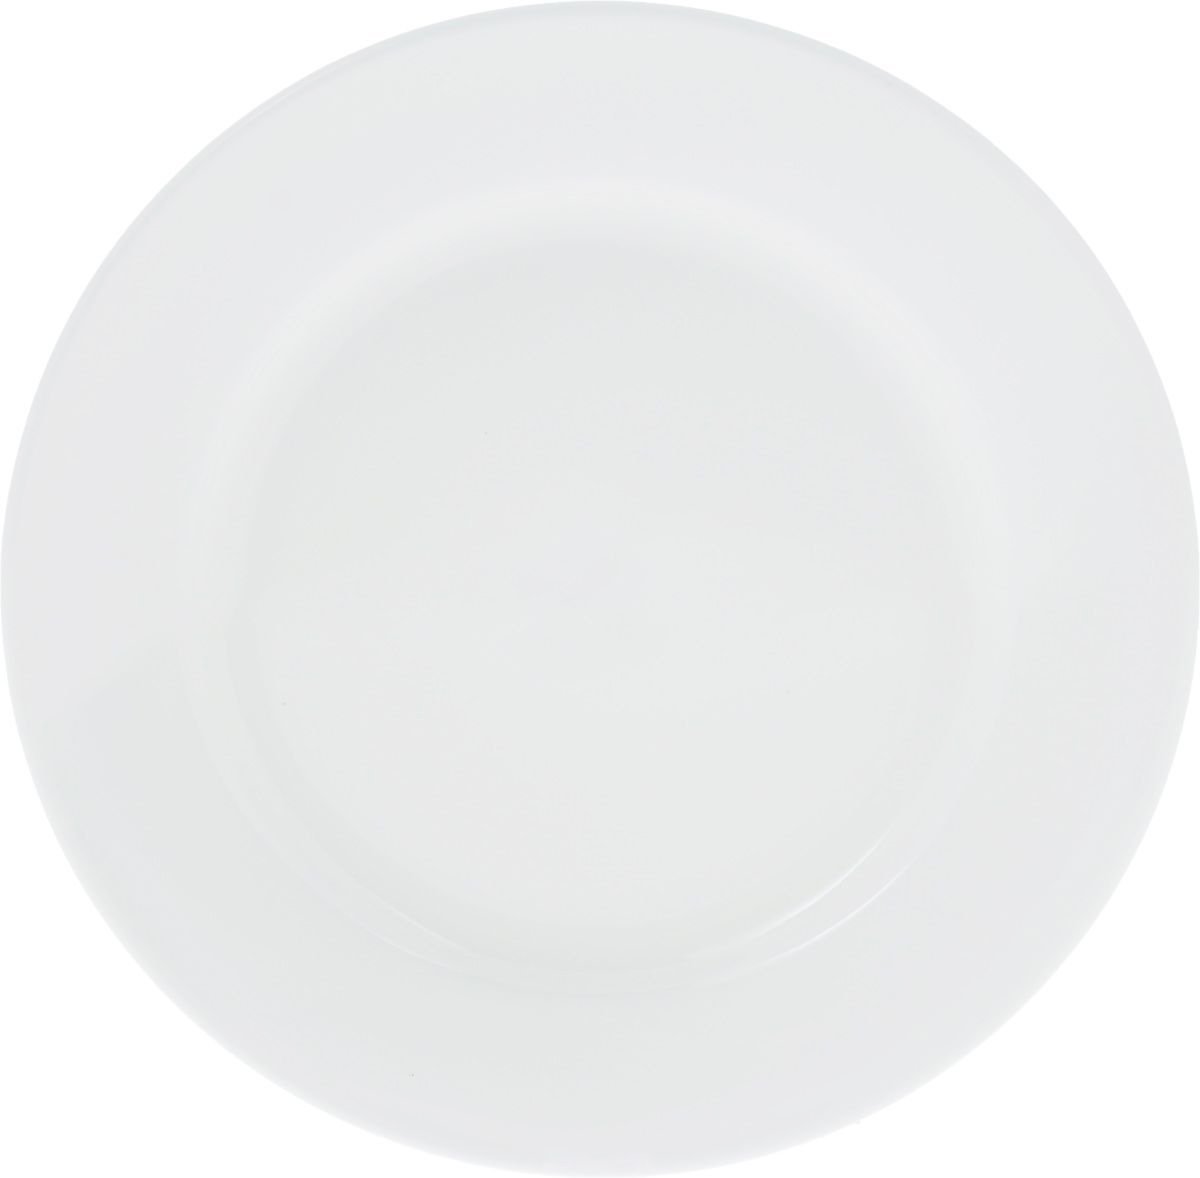 Professional Rolled Rim White Dessert Plate 7" inch | 18 Cm